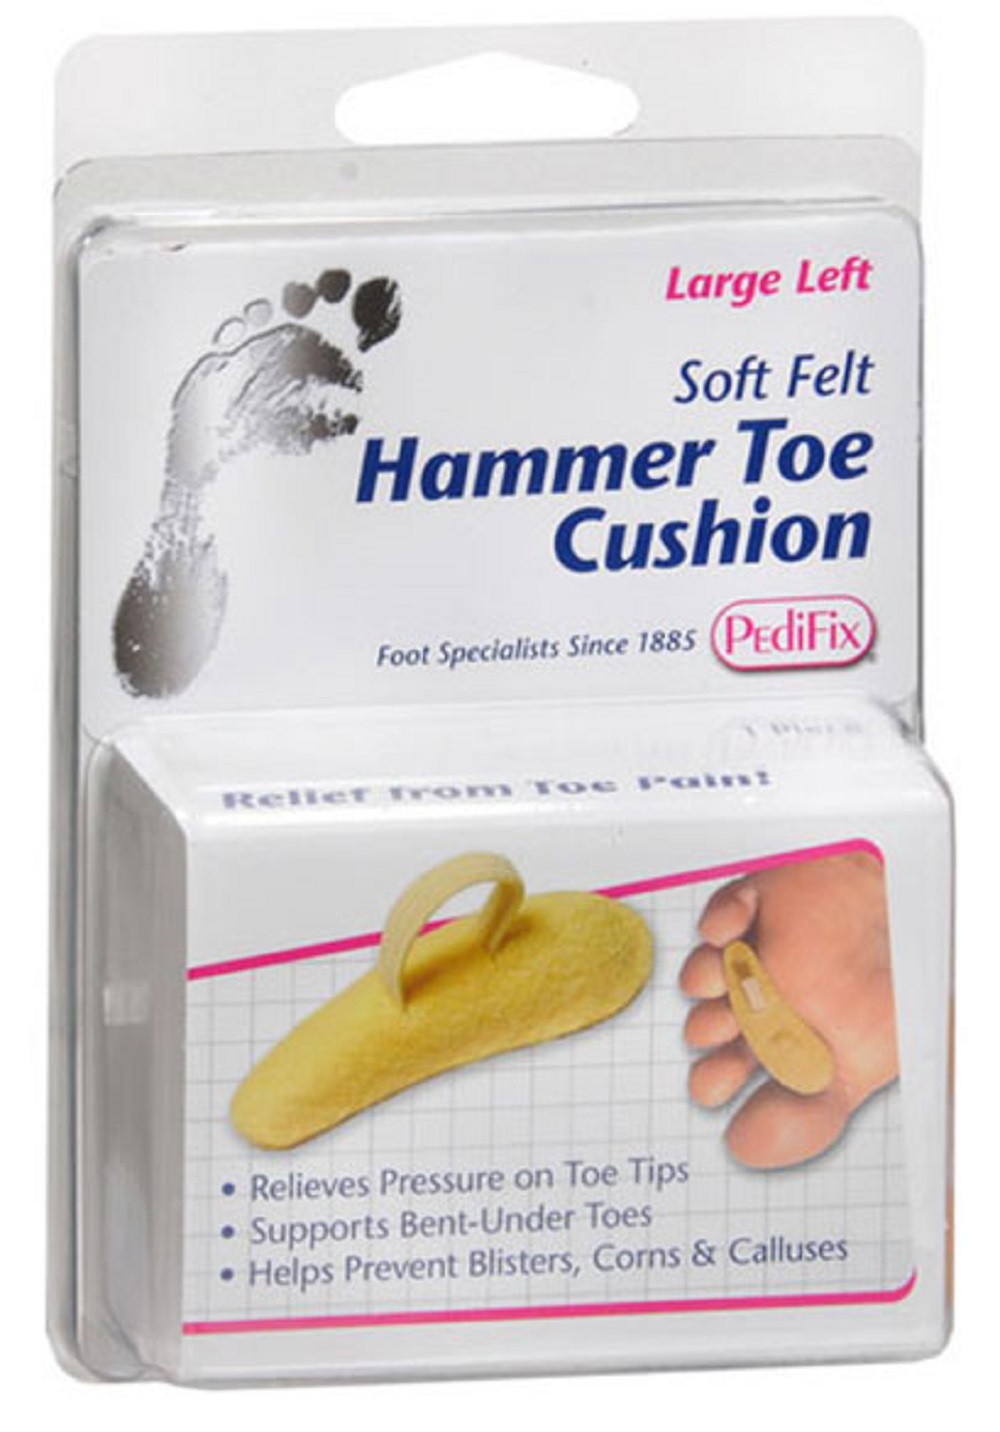 PediFix Hammer Toe Cushion Felt 1/Pack Large Left - image 2 of 2